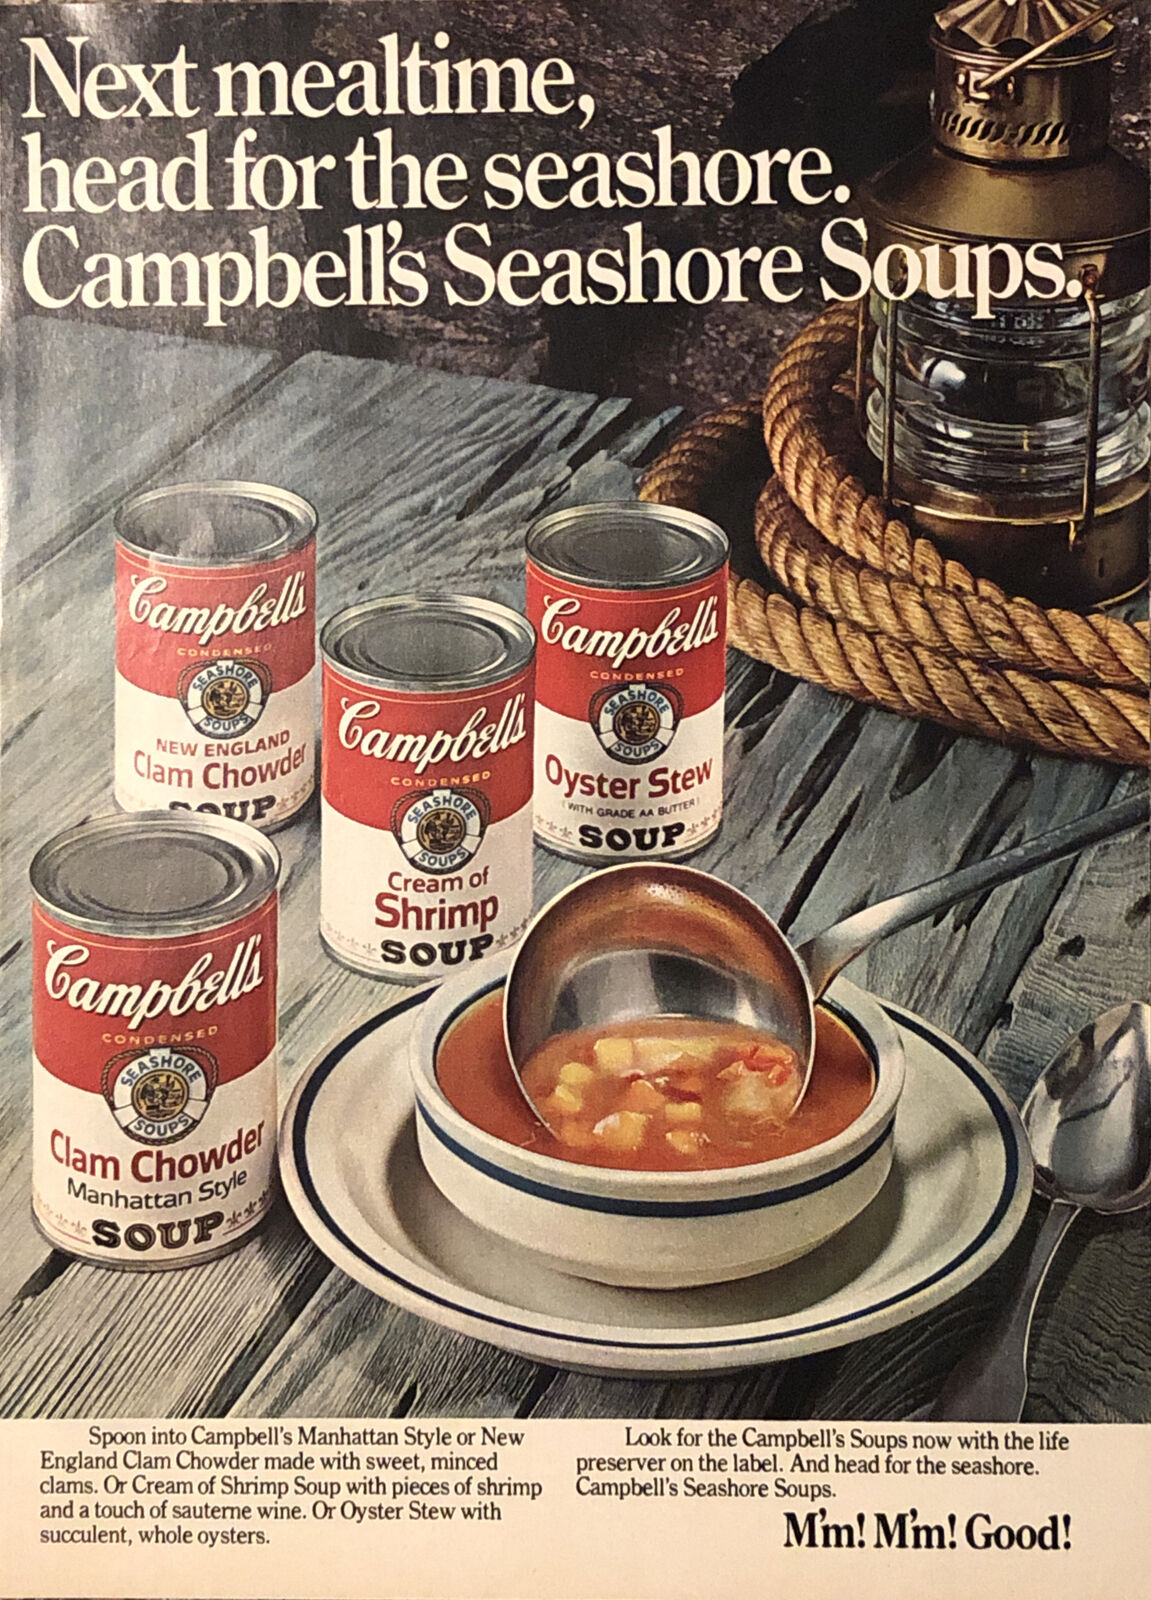 1974 Campbells Seashore Soups VTG 1970s PRINT AD Clam Chowder Oyster Stew Shrimp